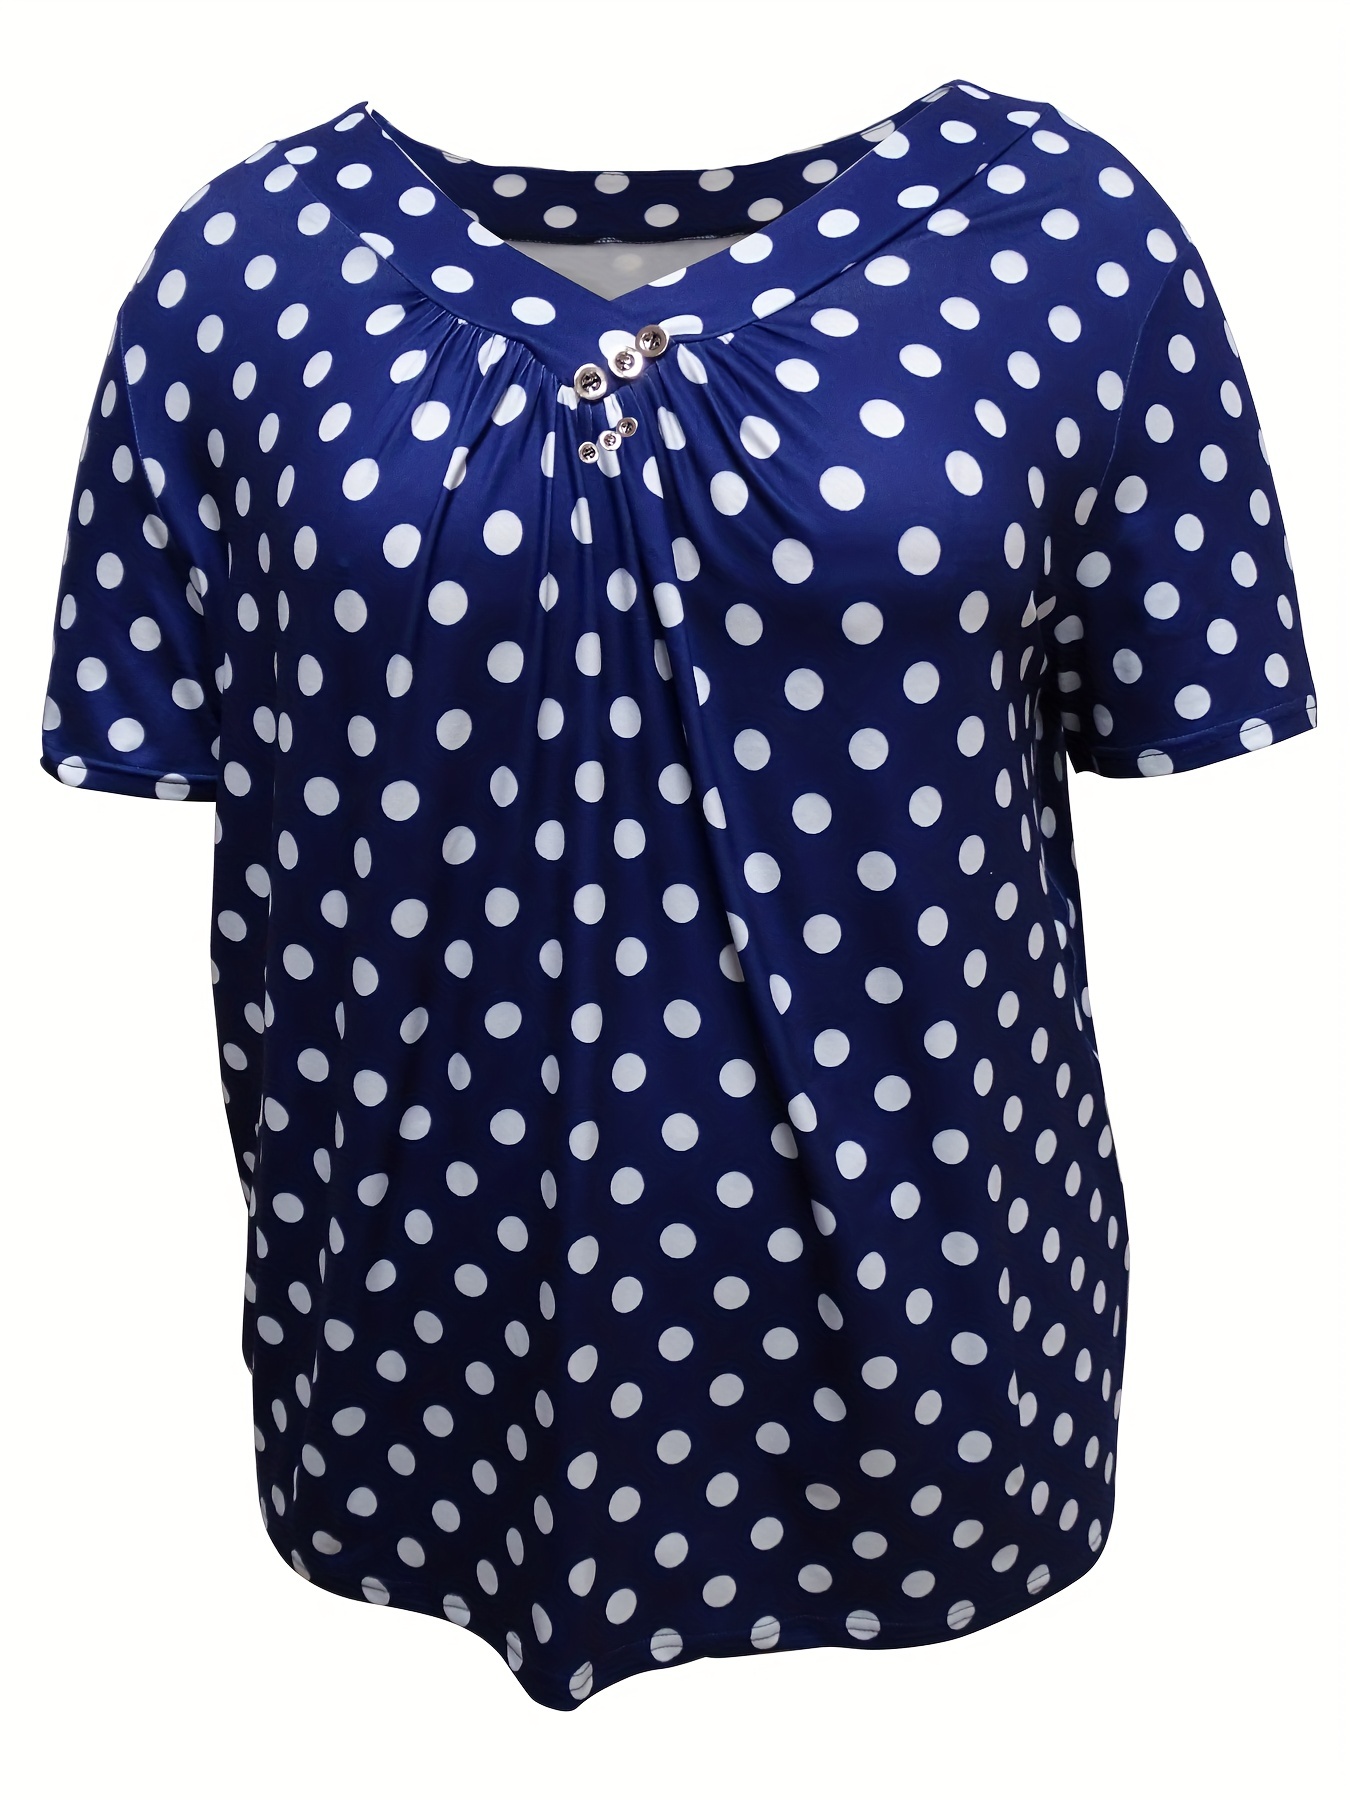 Plus Size Navy Blue Polka Dot Print Button Through Shirt